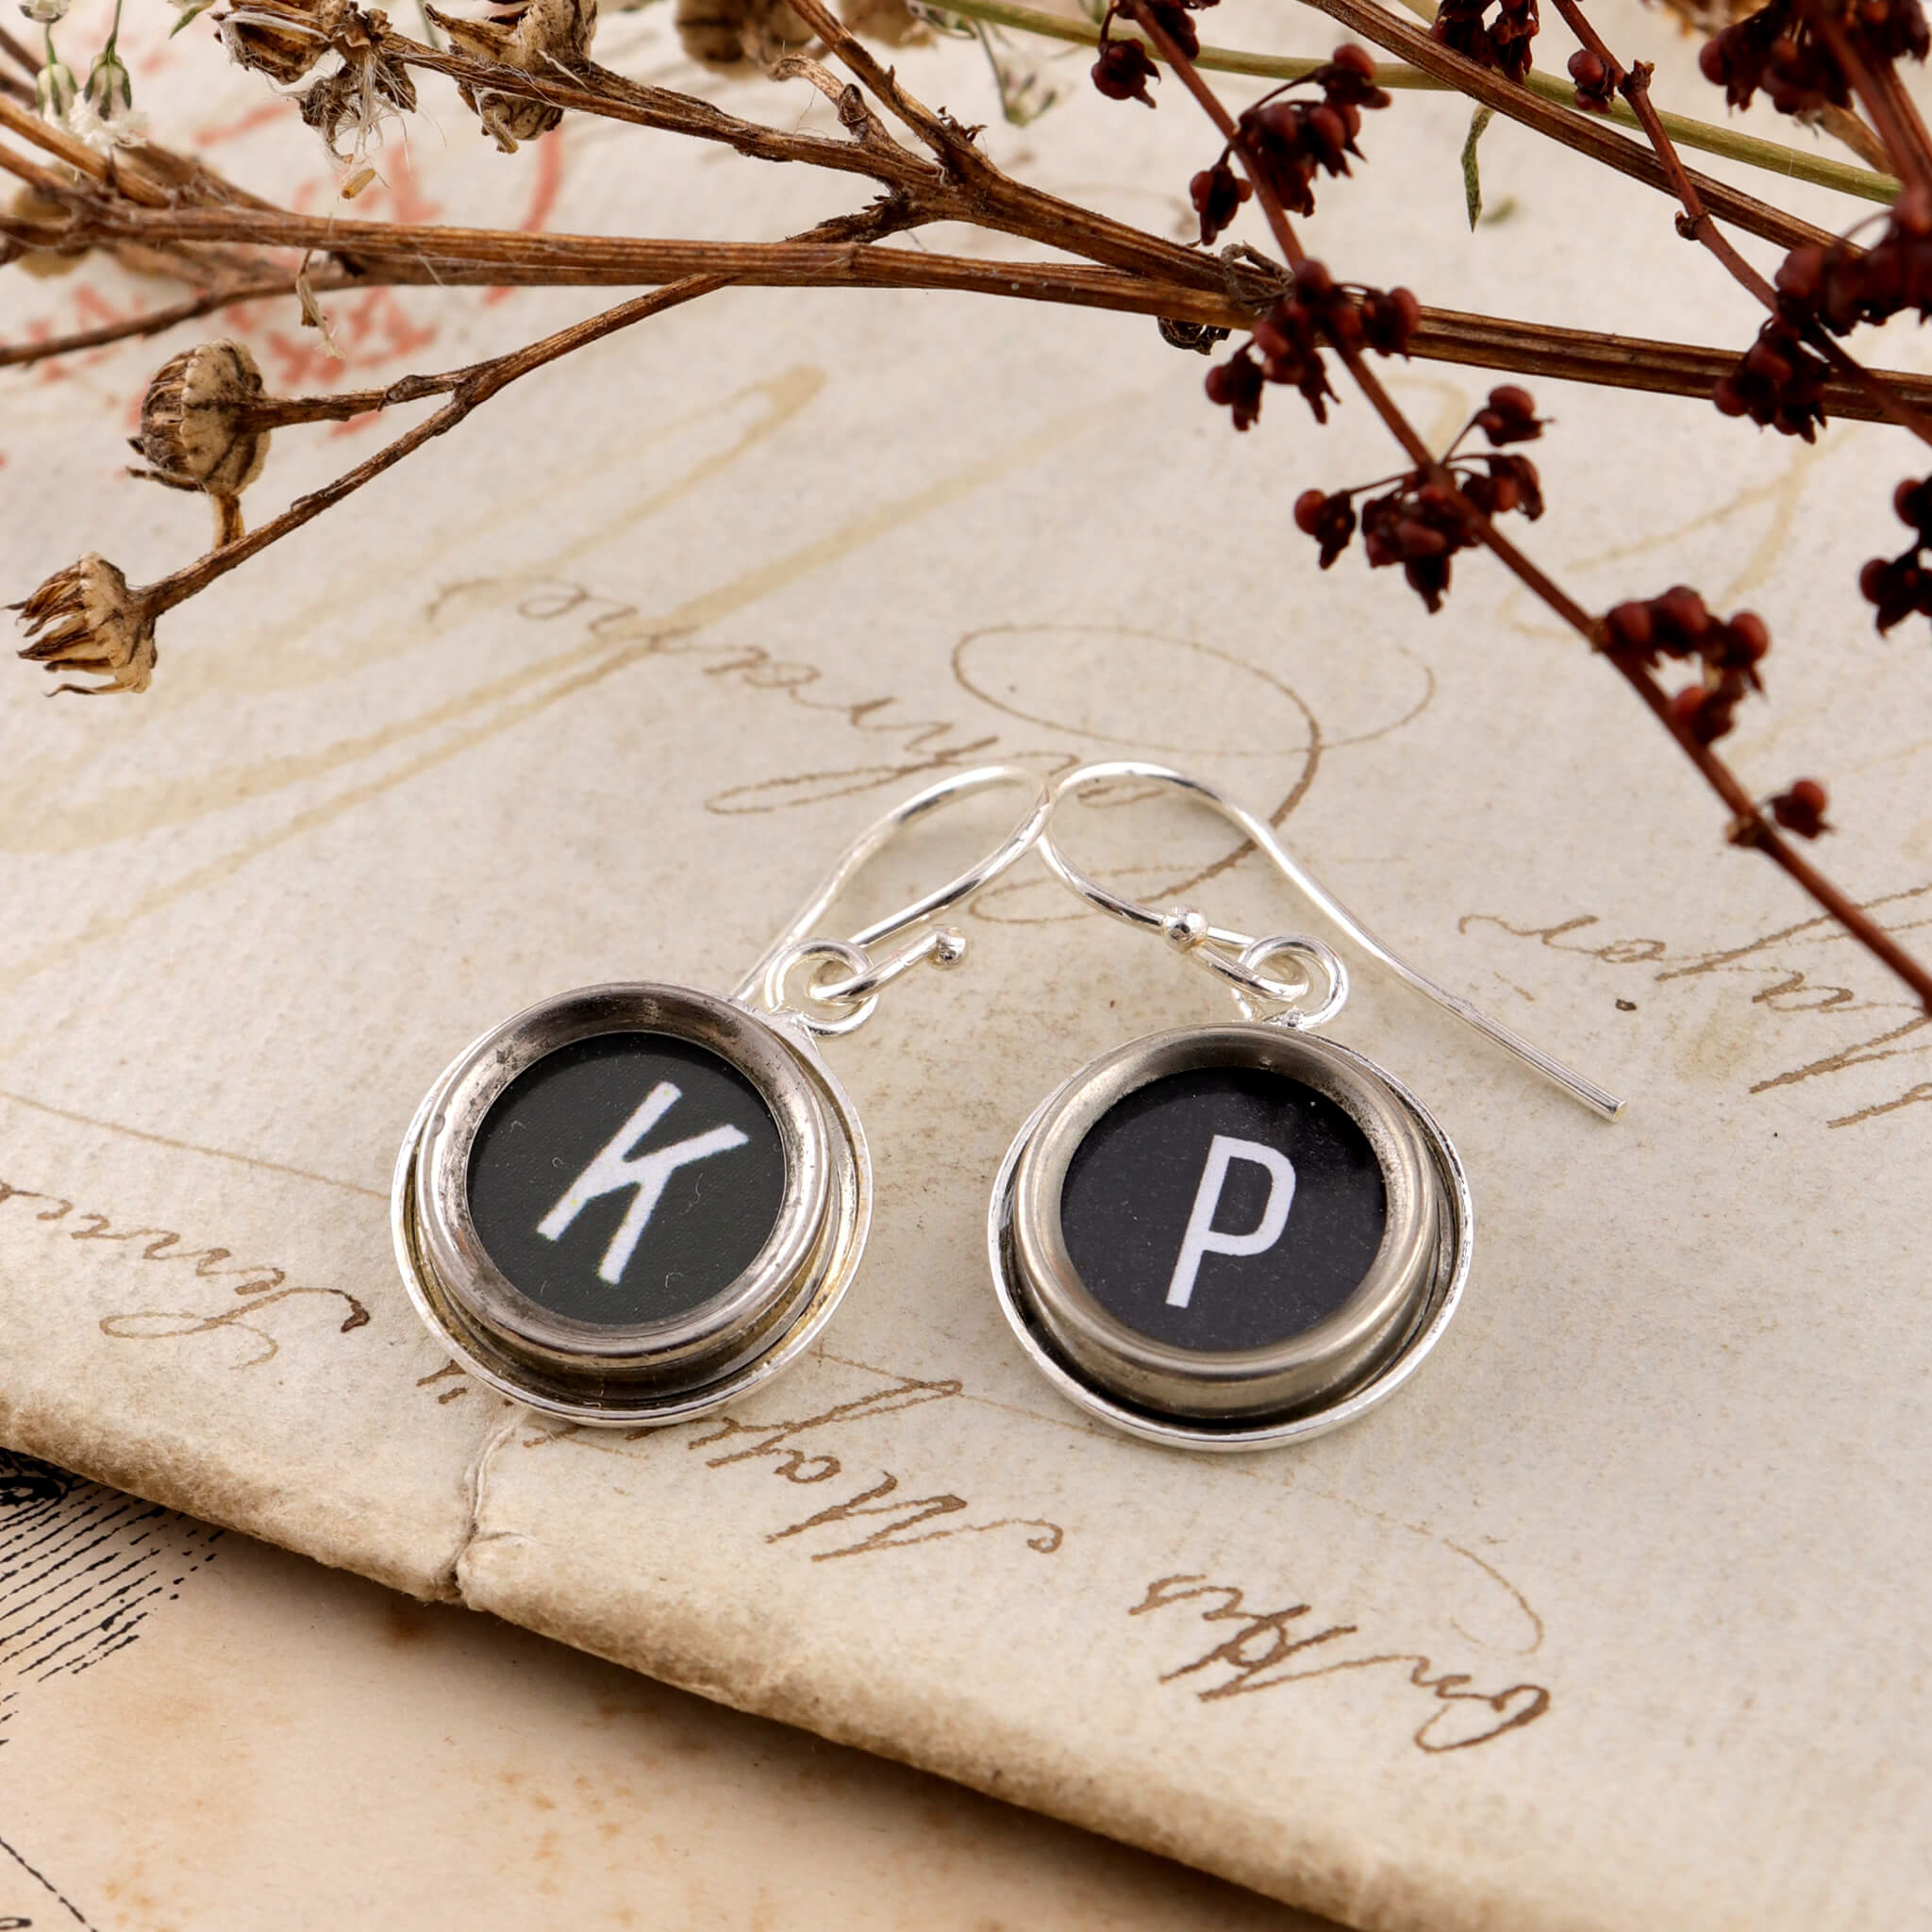 Black initial earrings K and P made of old typewriter keys